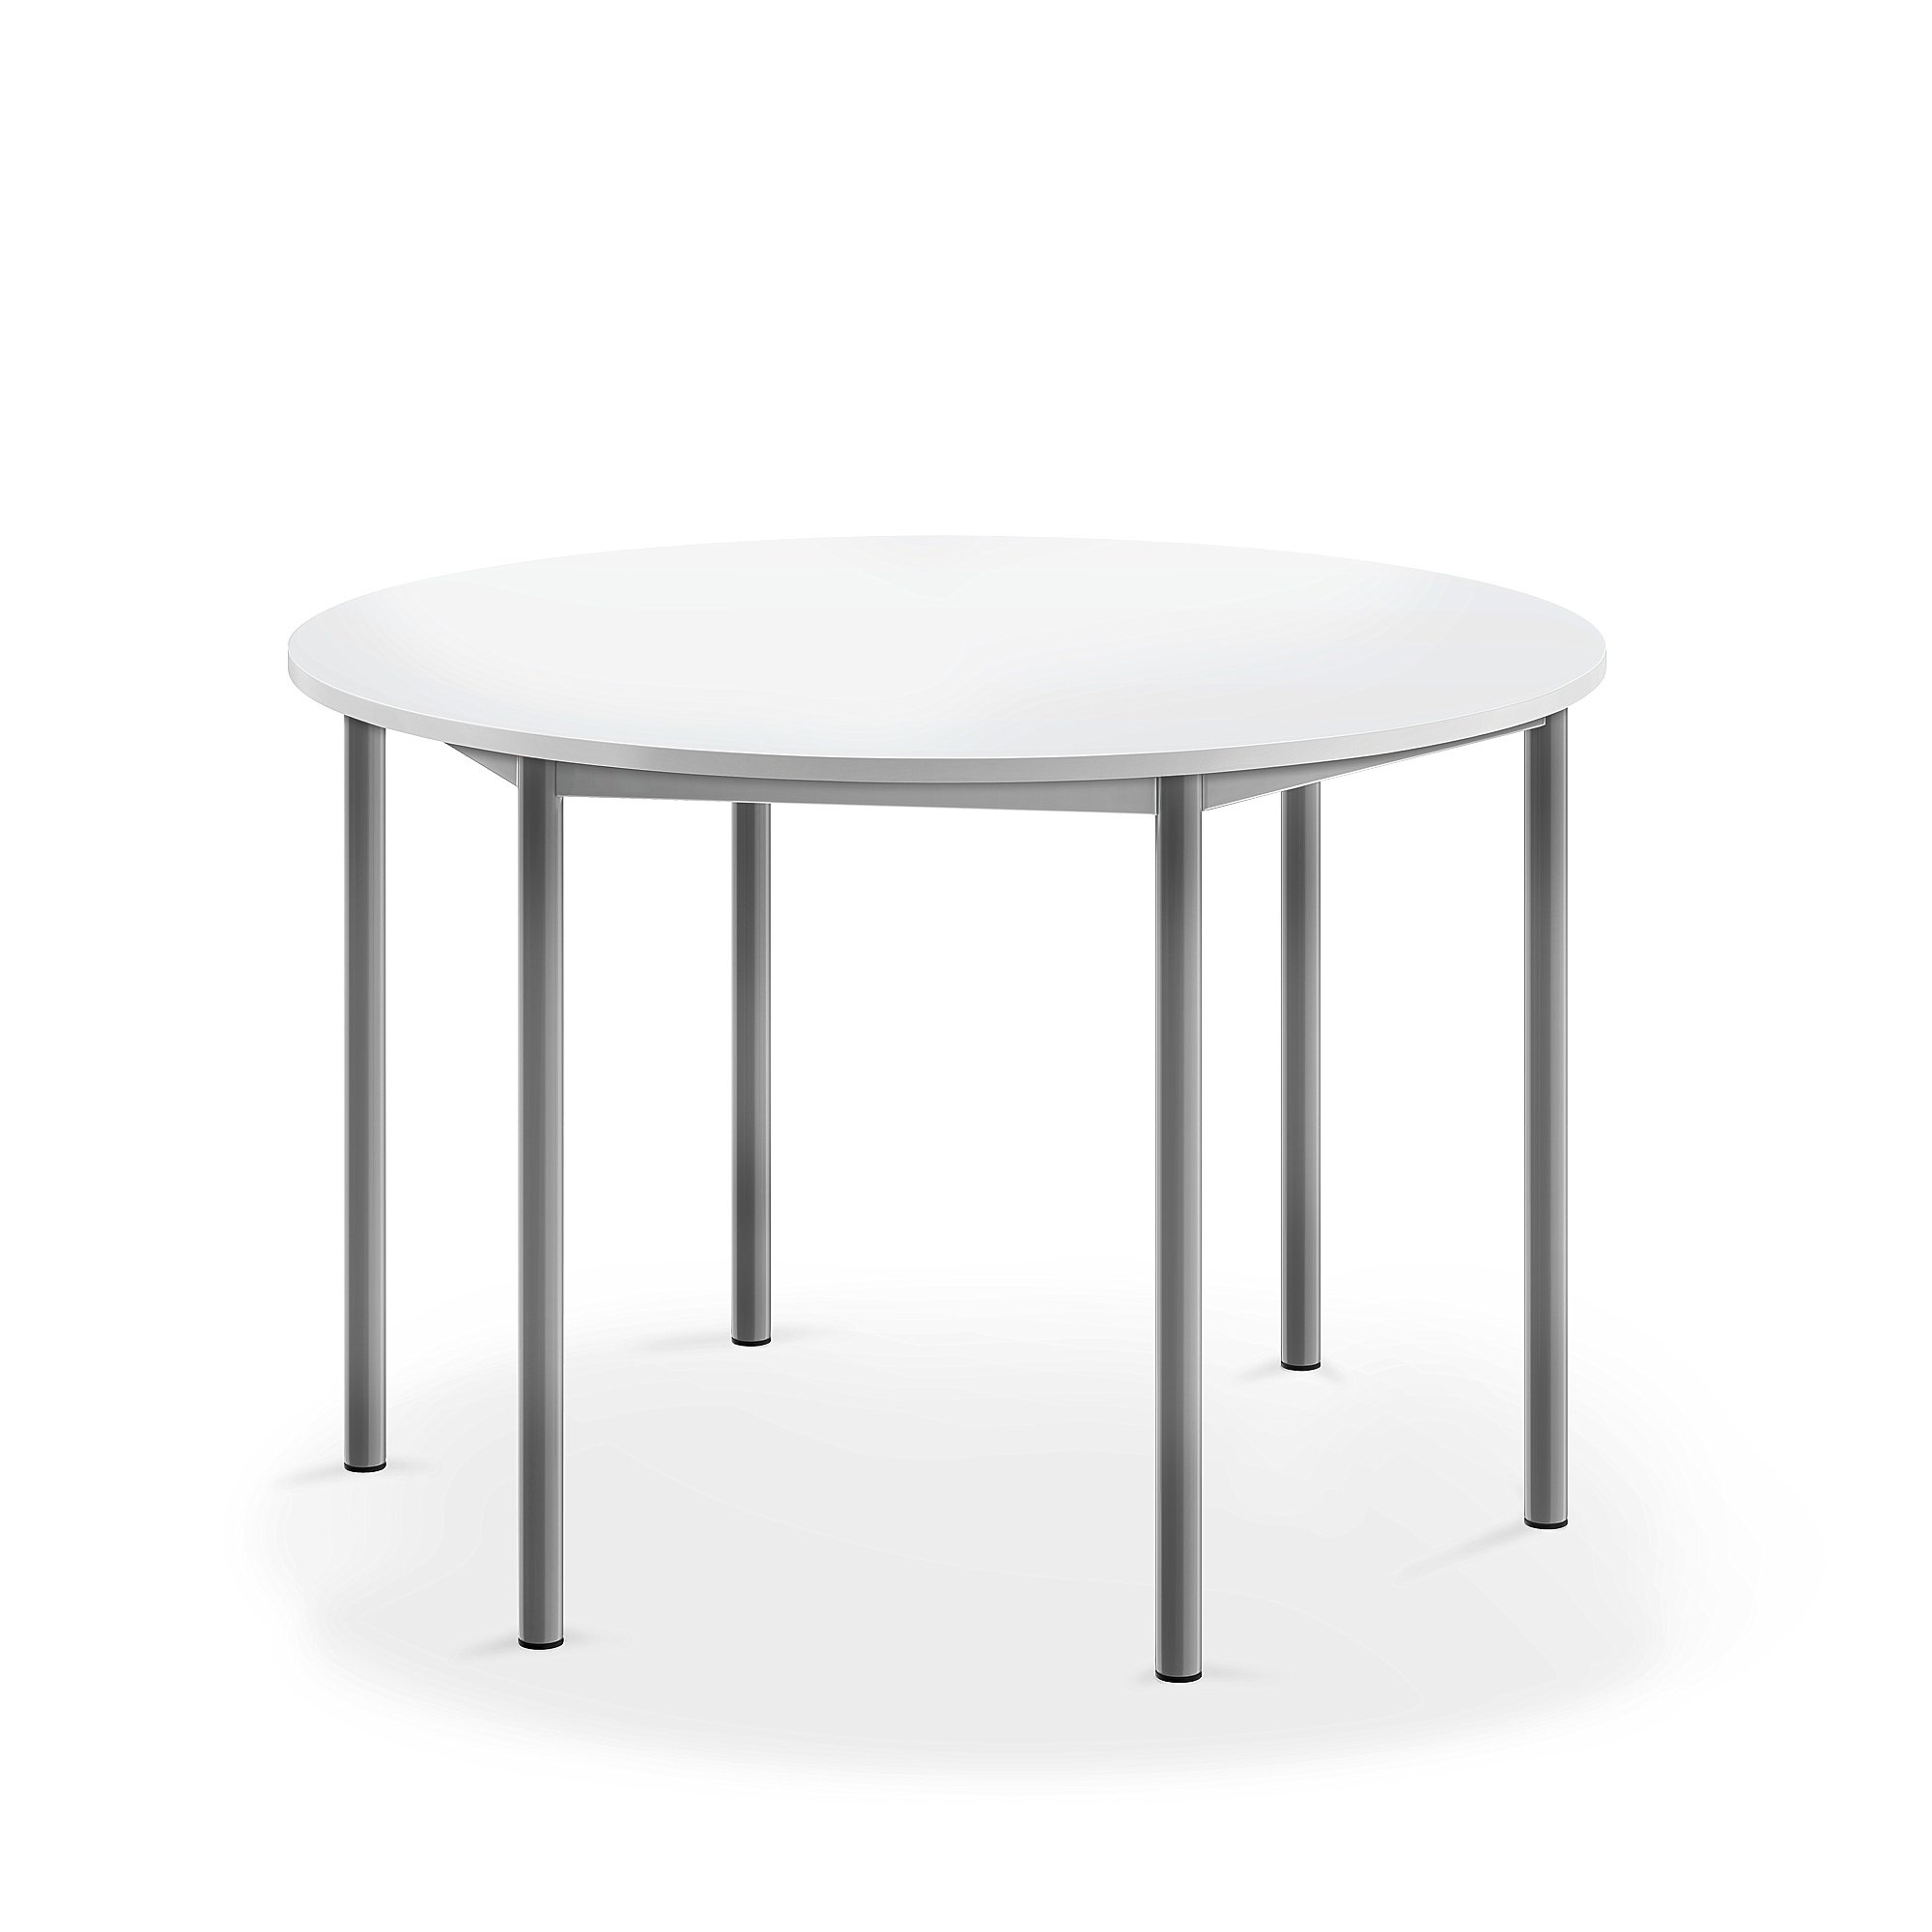 Stůl BORÅS, Ø1200x760 mm, stříbrné nohy, HPL deska, bílá